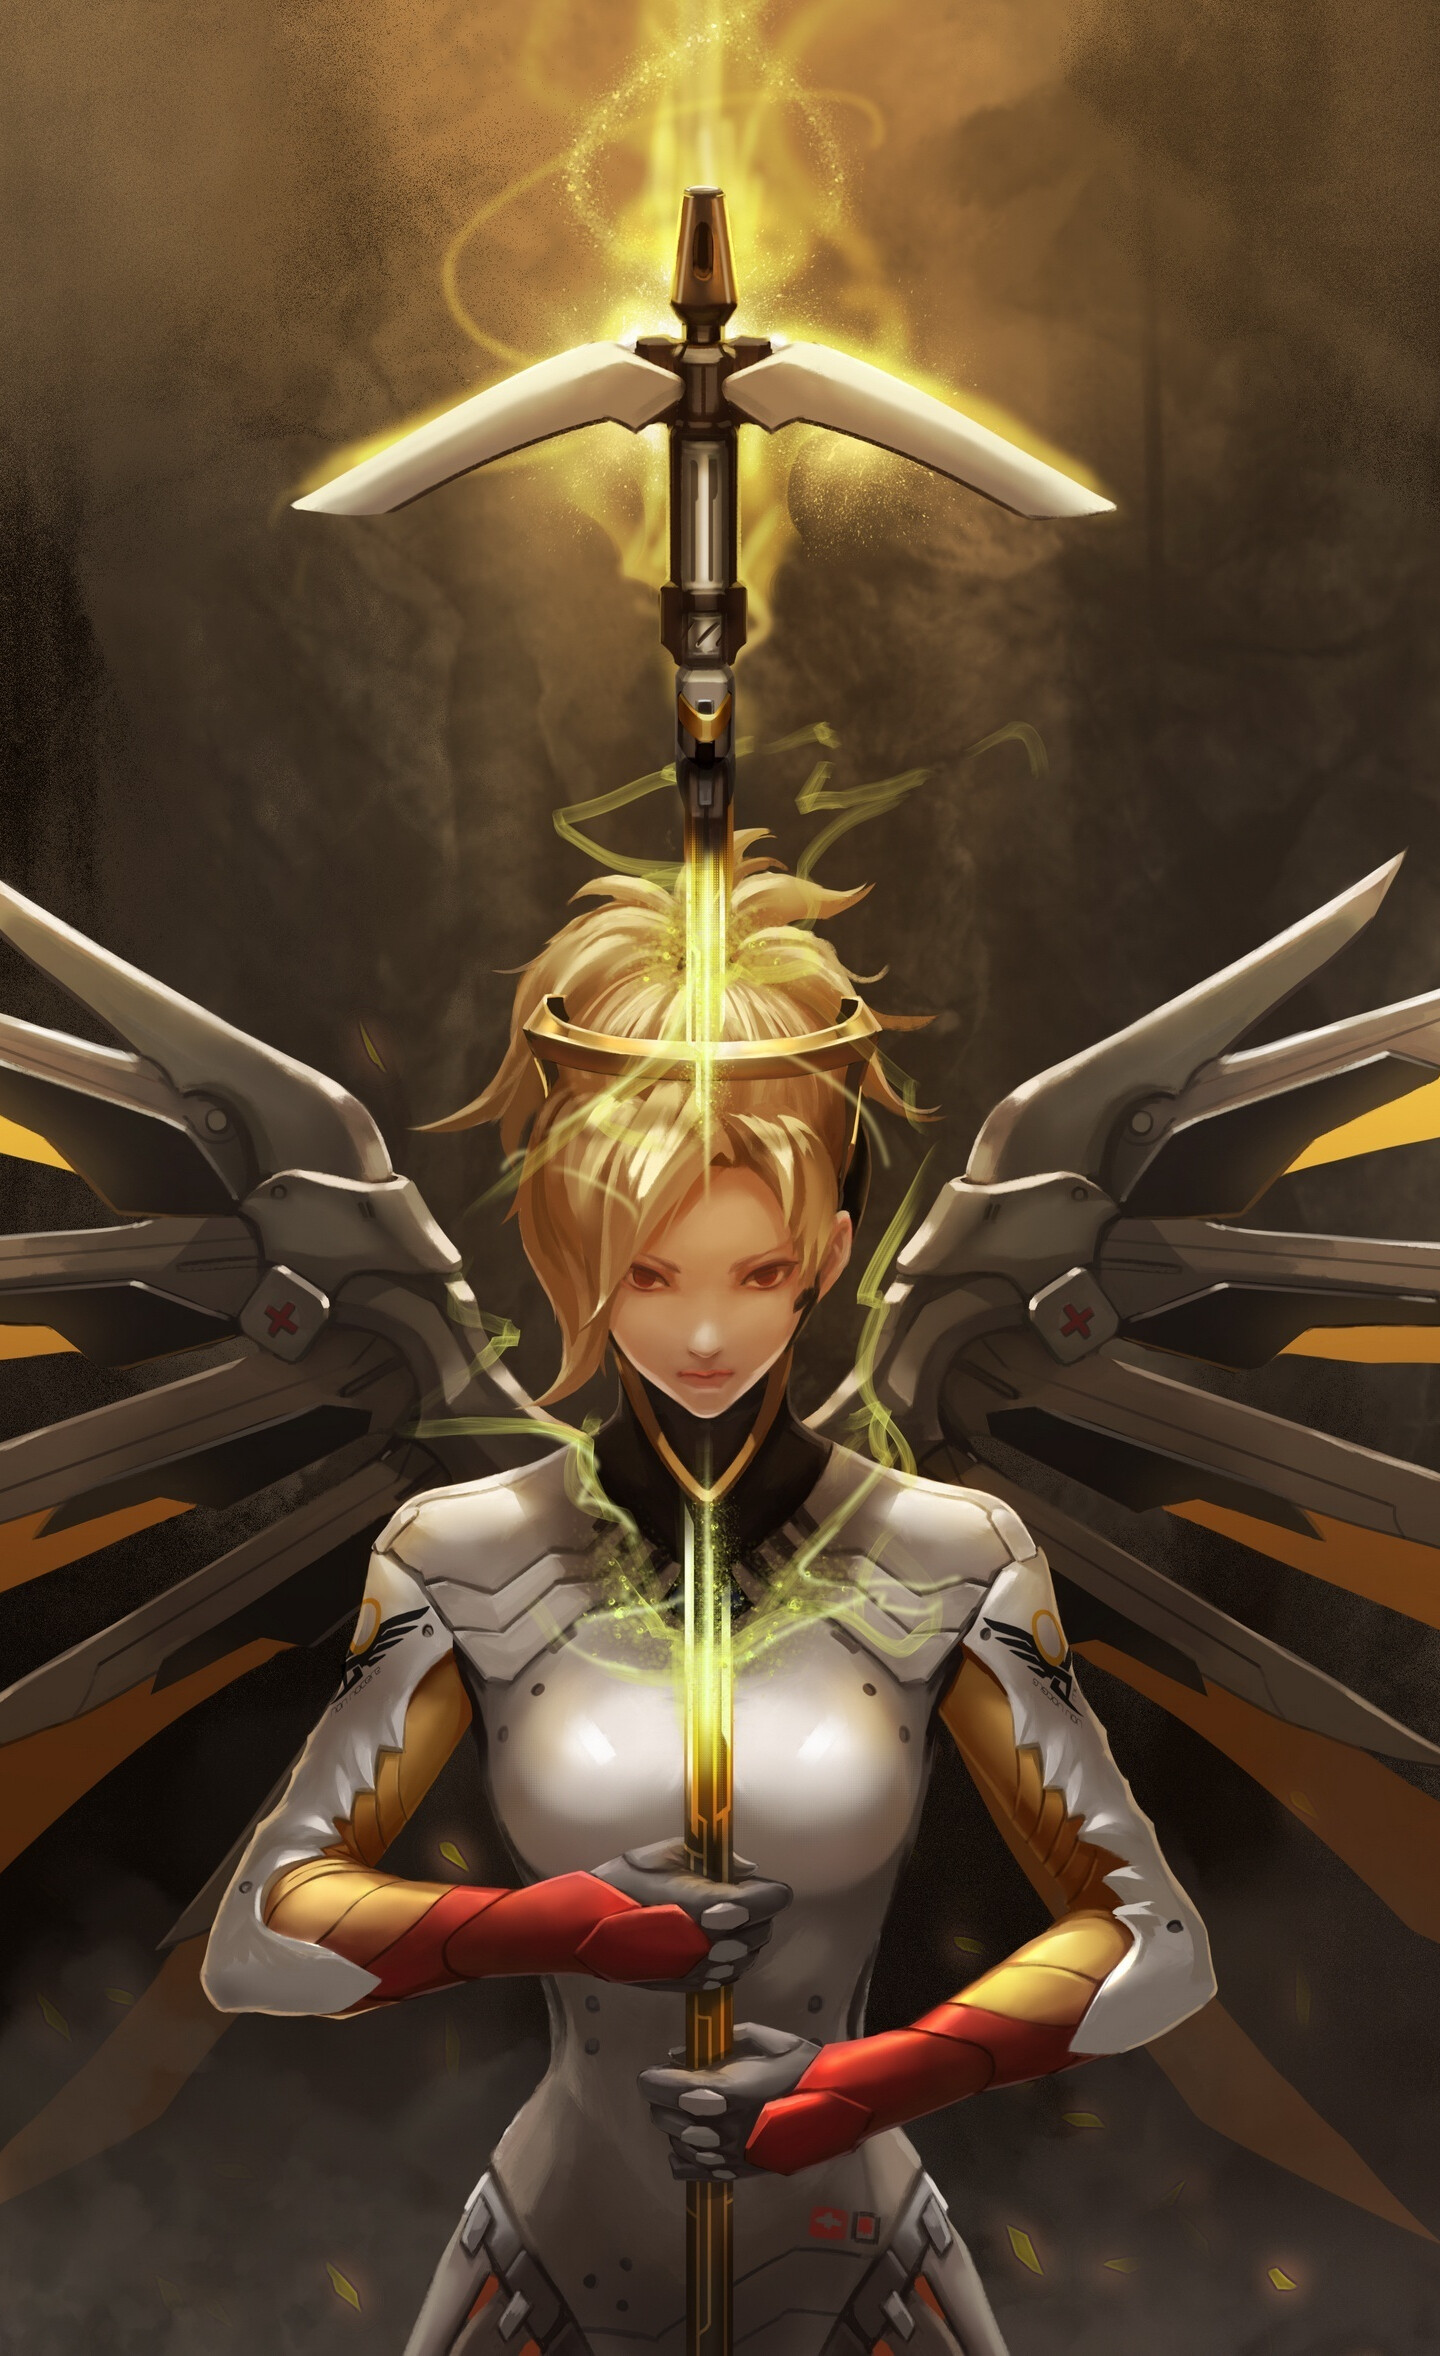 Overwatch: Robotic wings, Mercy, Angel, Artwork, Caduceus Staff. 1440x2360 HD Wallpaper.